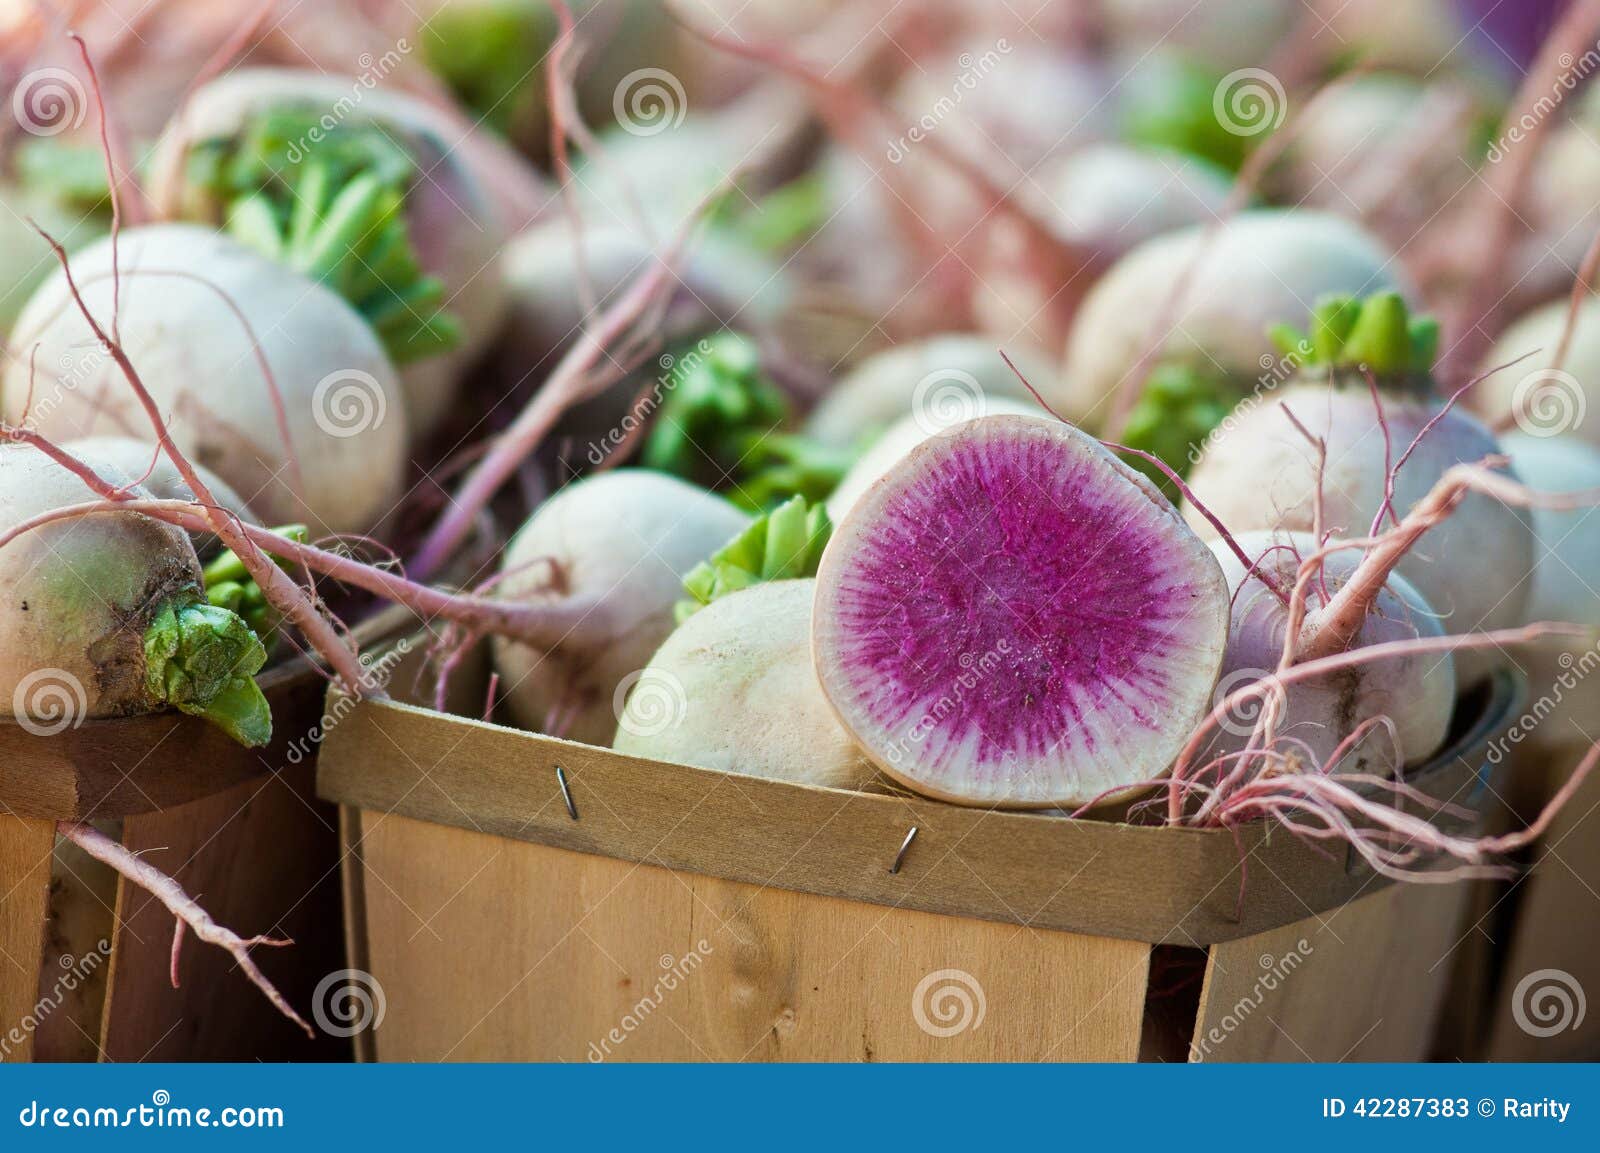 fresh-picked-organic-watermelon-radish-baskets-roots-42287383.jpg